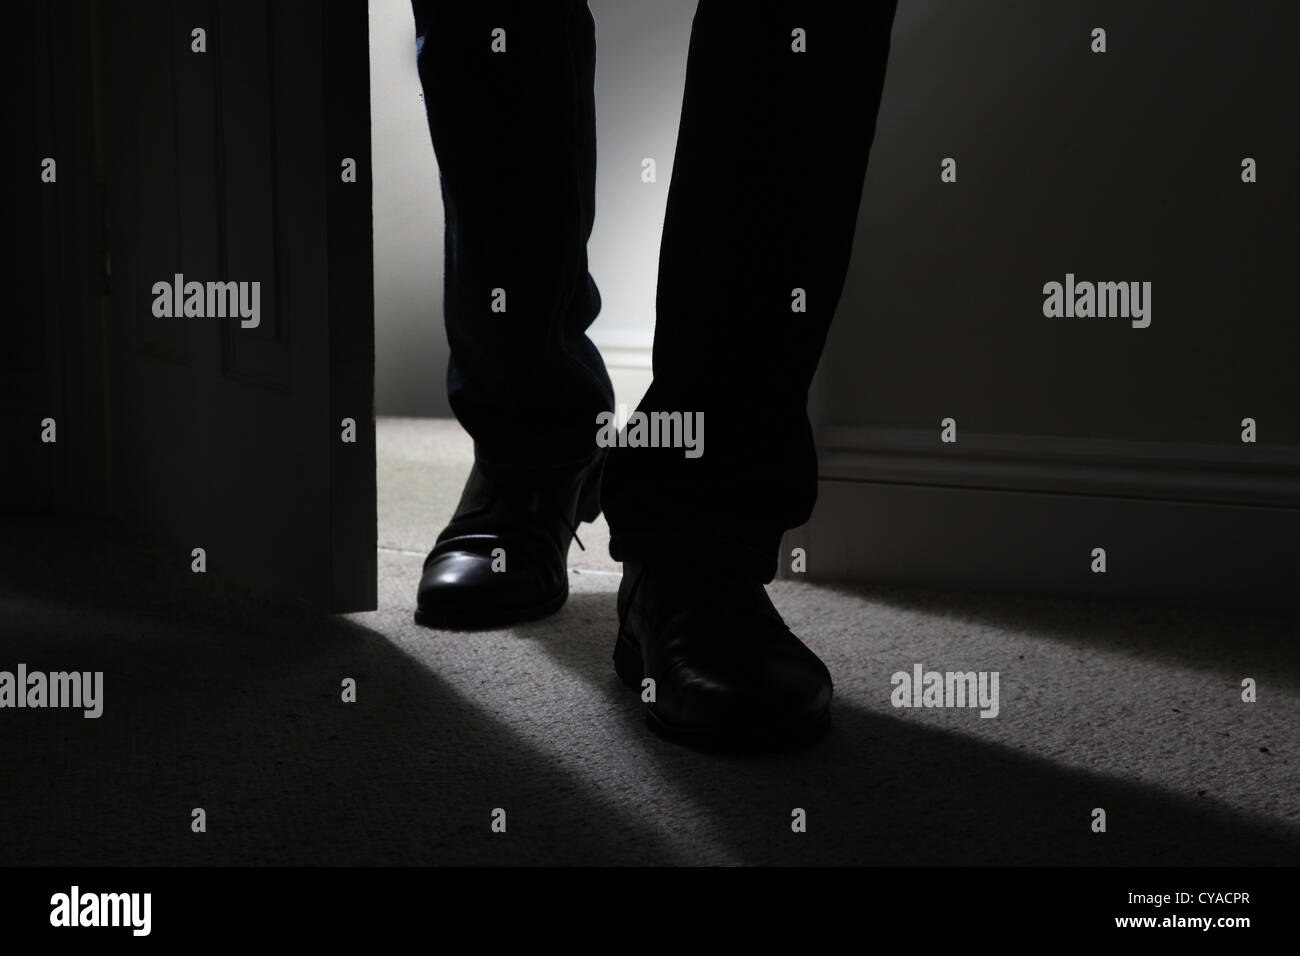 Male wearing black shoes entering a dark room, back lit. Close up sinister evil Stock Photo